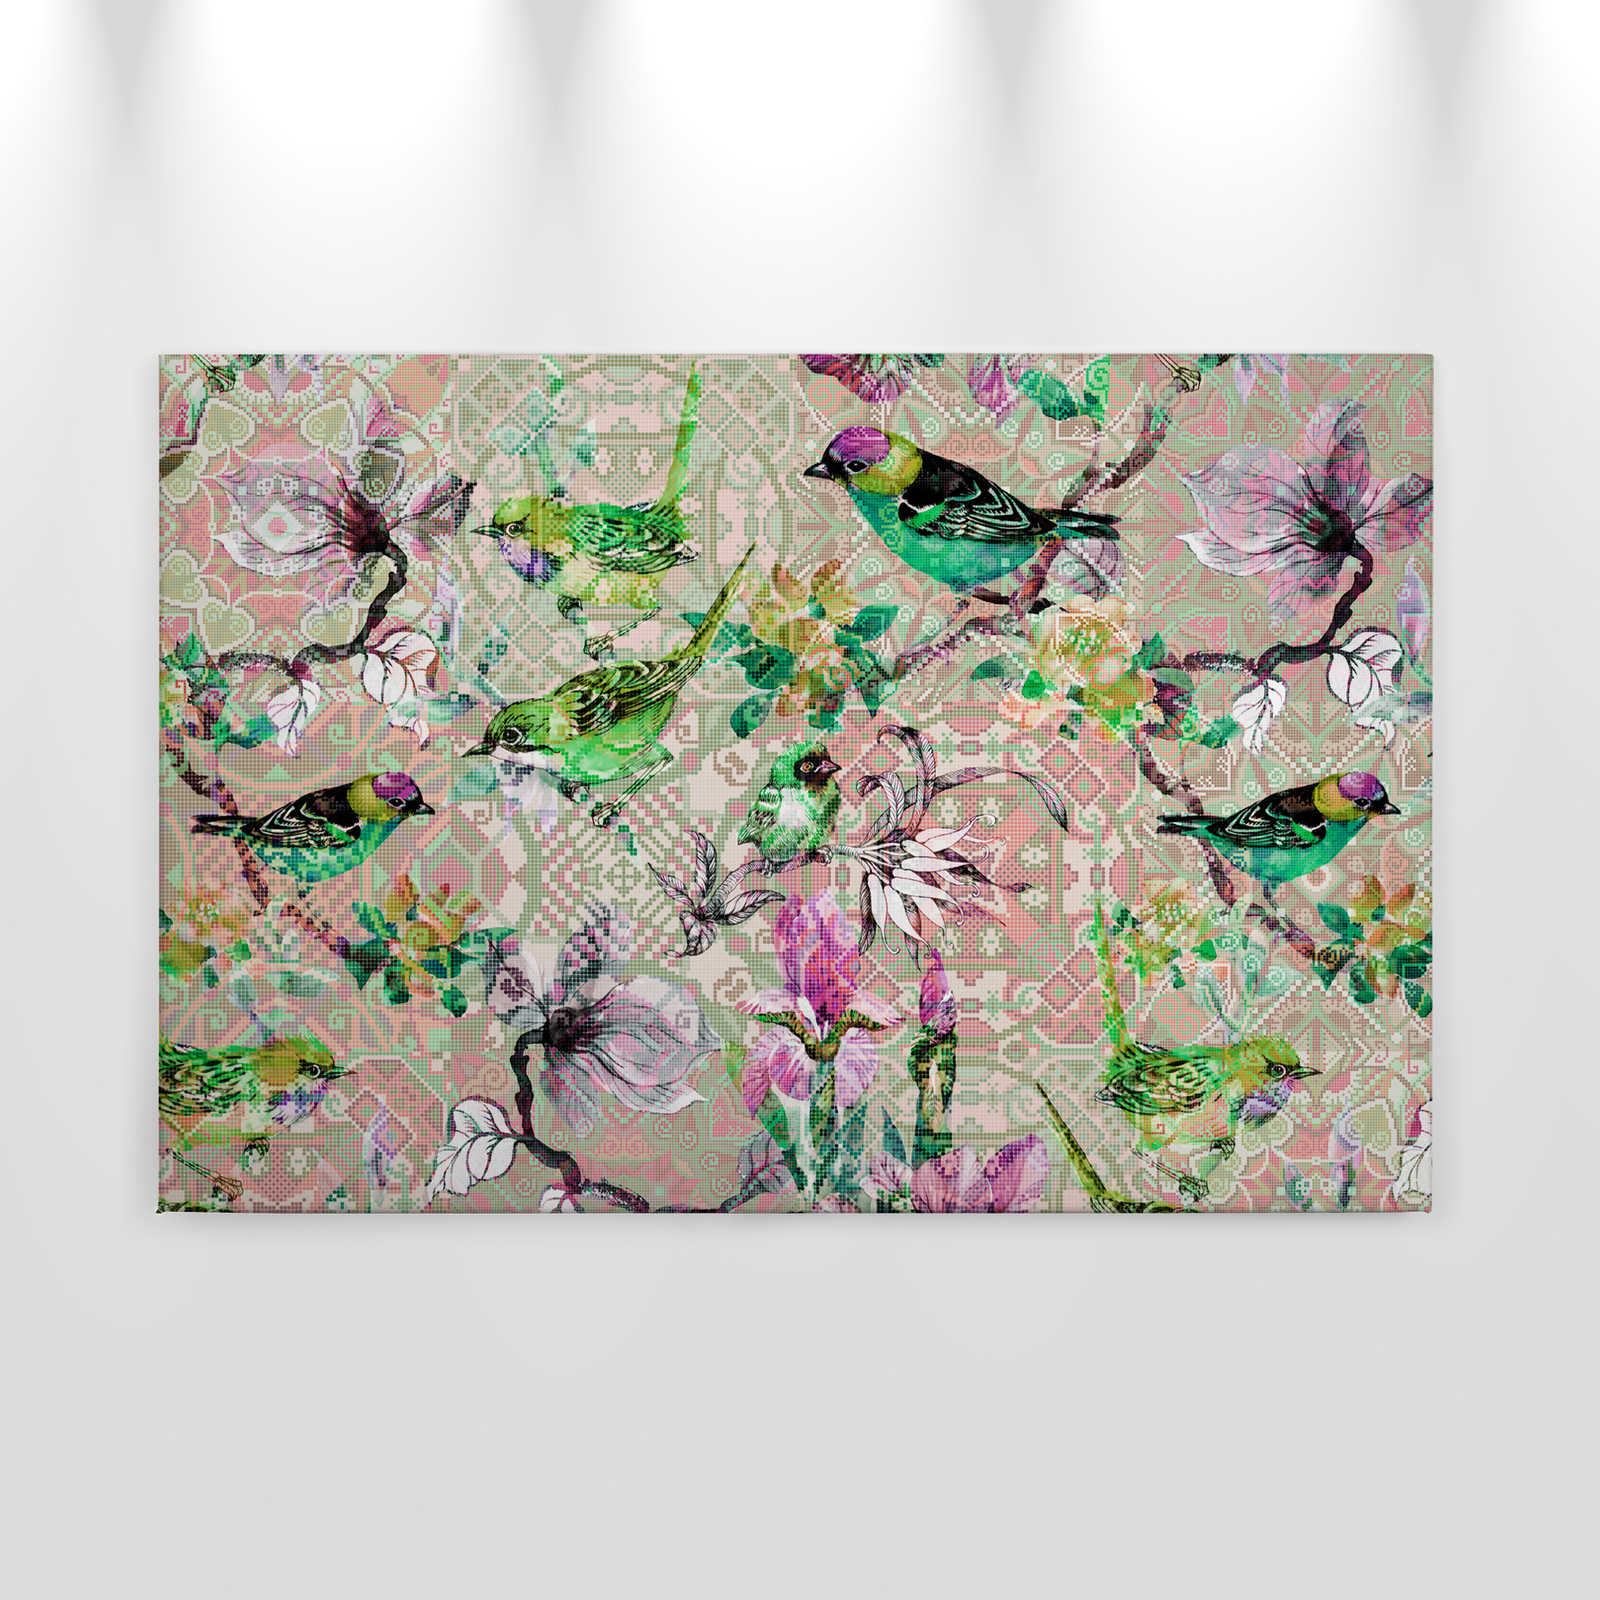             Quadro su tela con uccelli a mosaico | uccelli a mosaico 2 - 0,90 m x 0,60 m
        